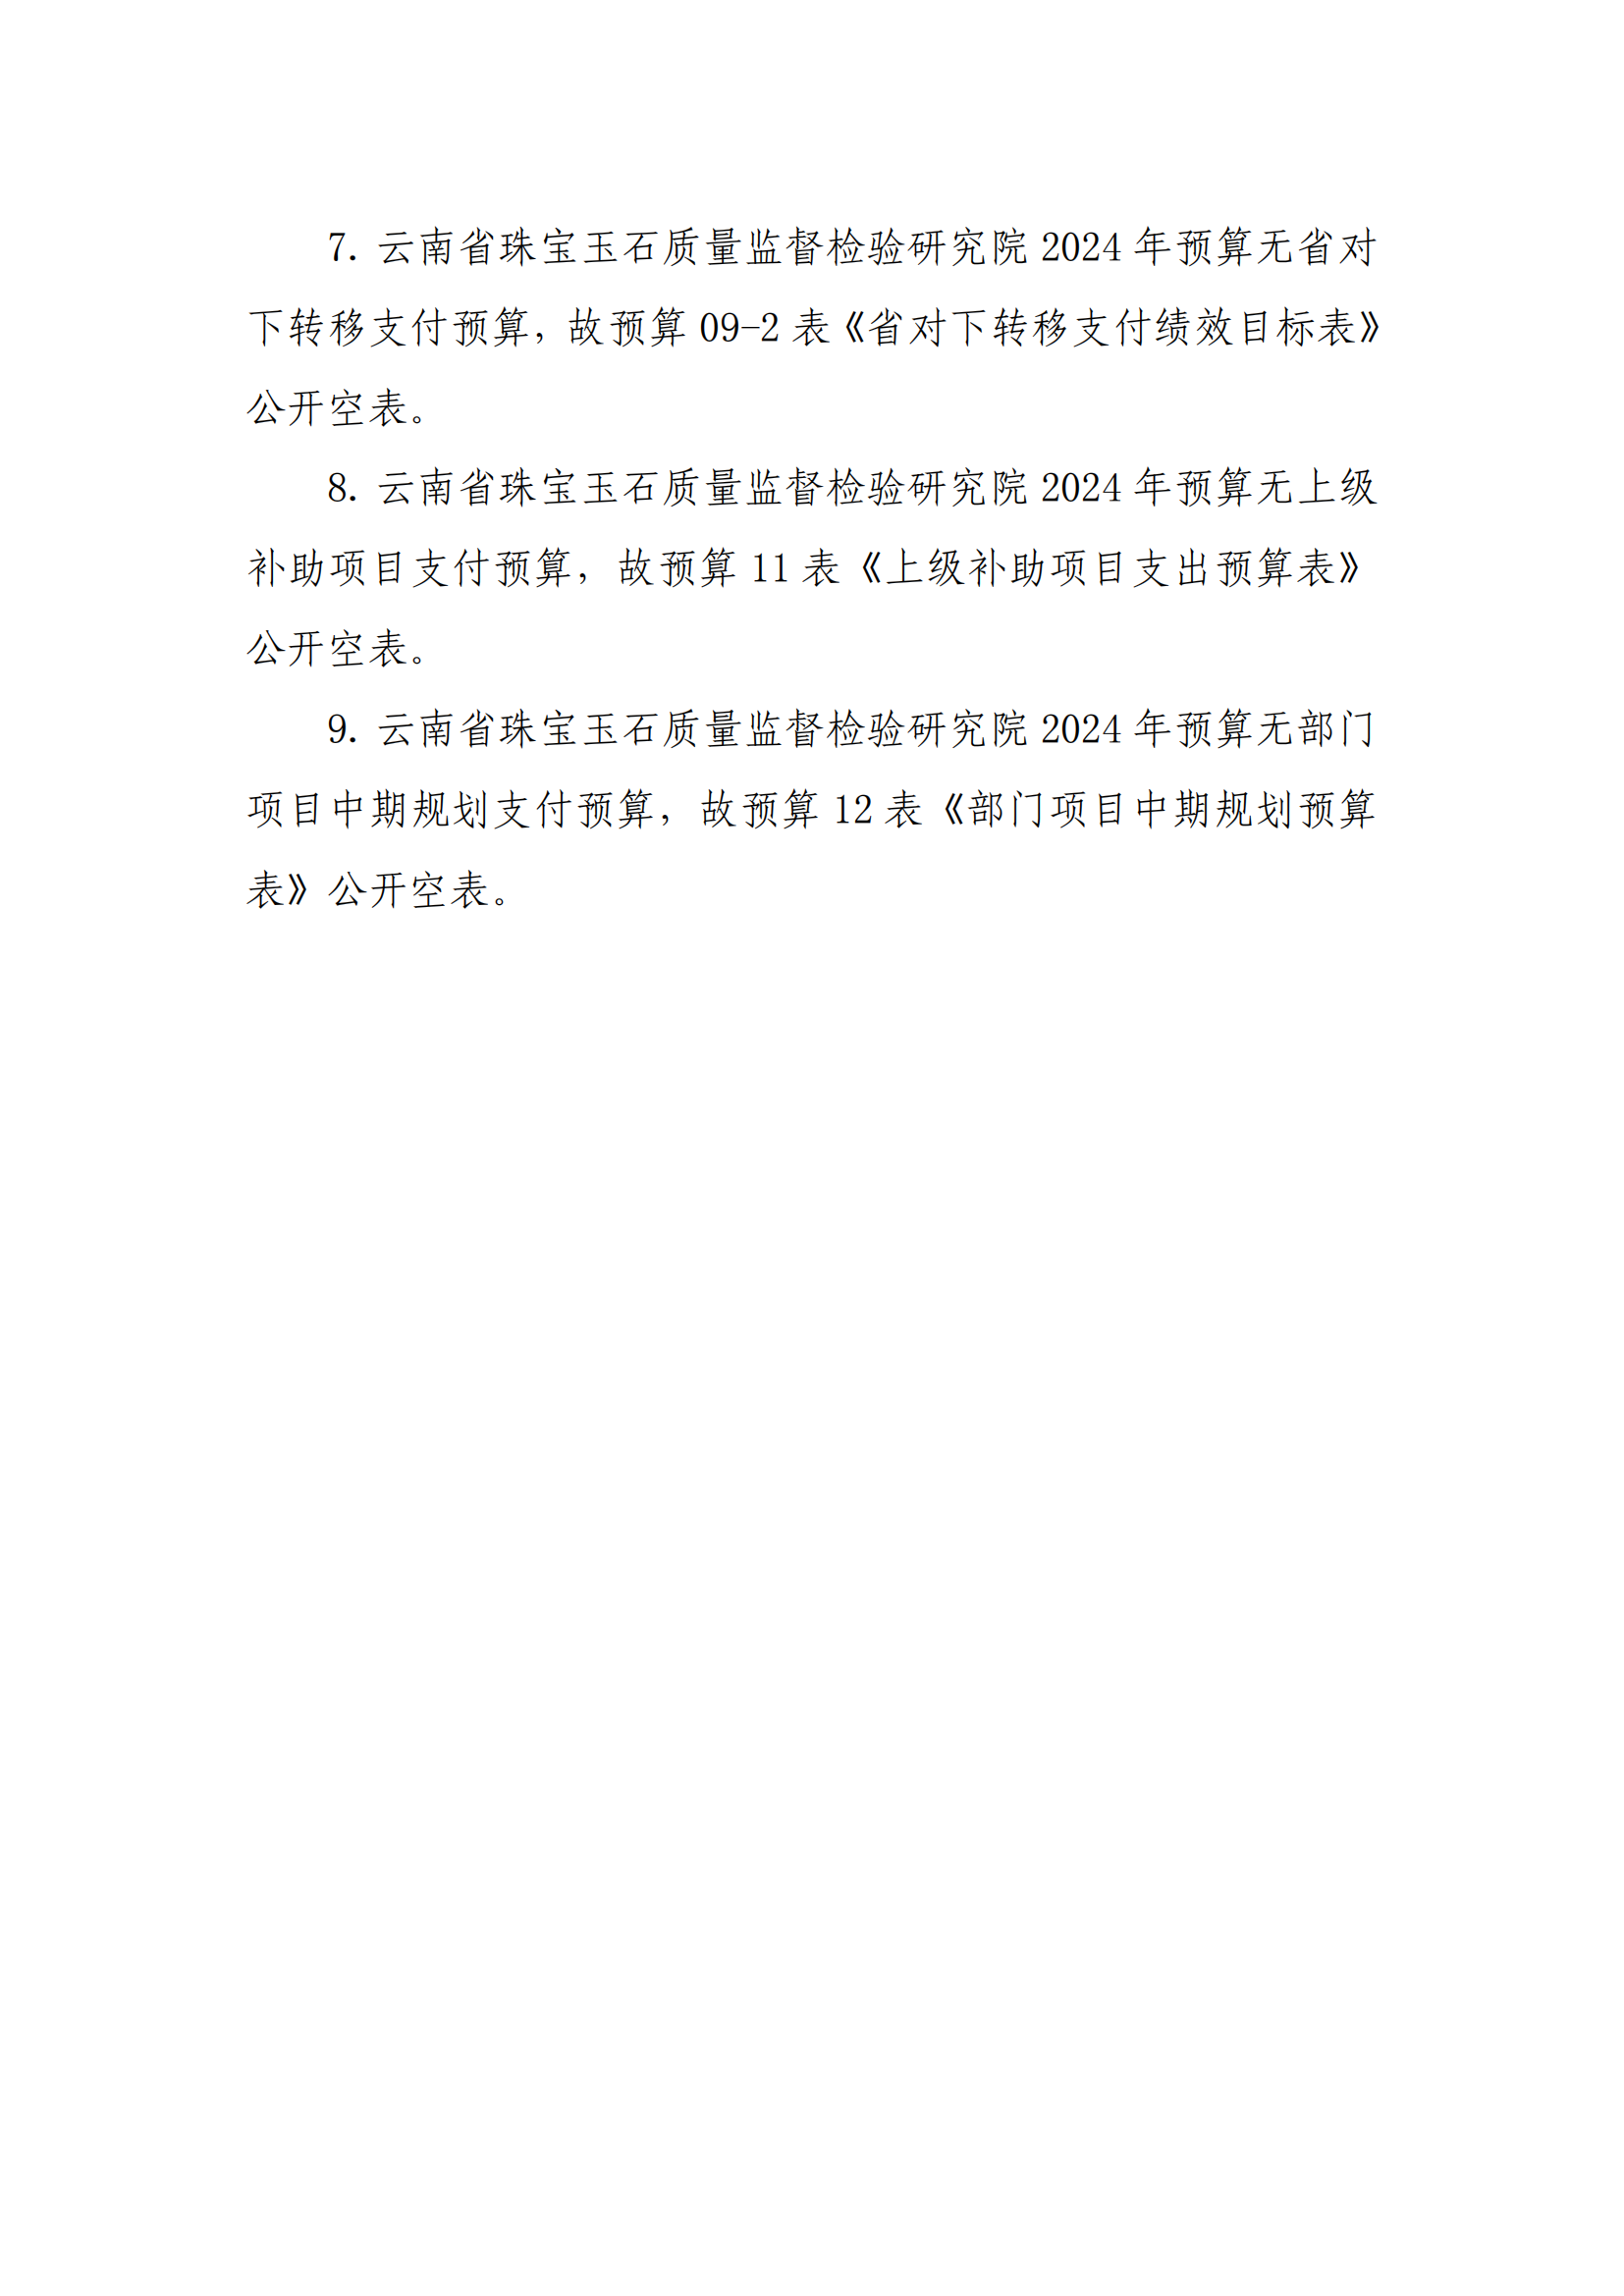 gongkaishuoming_2_180910027_云南省珠宝玉石质量监督检验研究院(1)_11.png